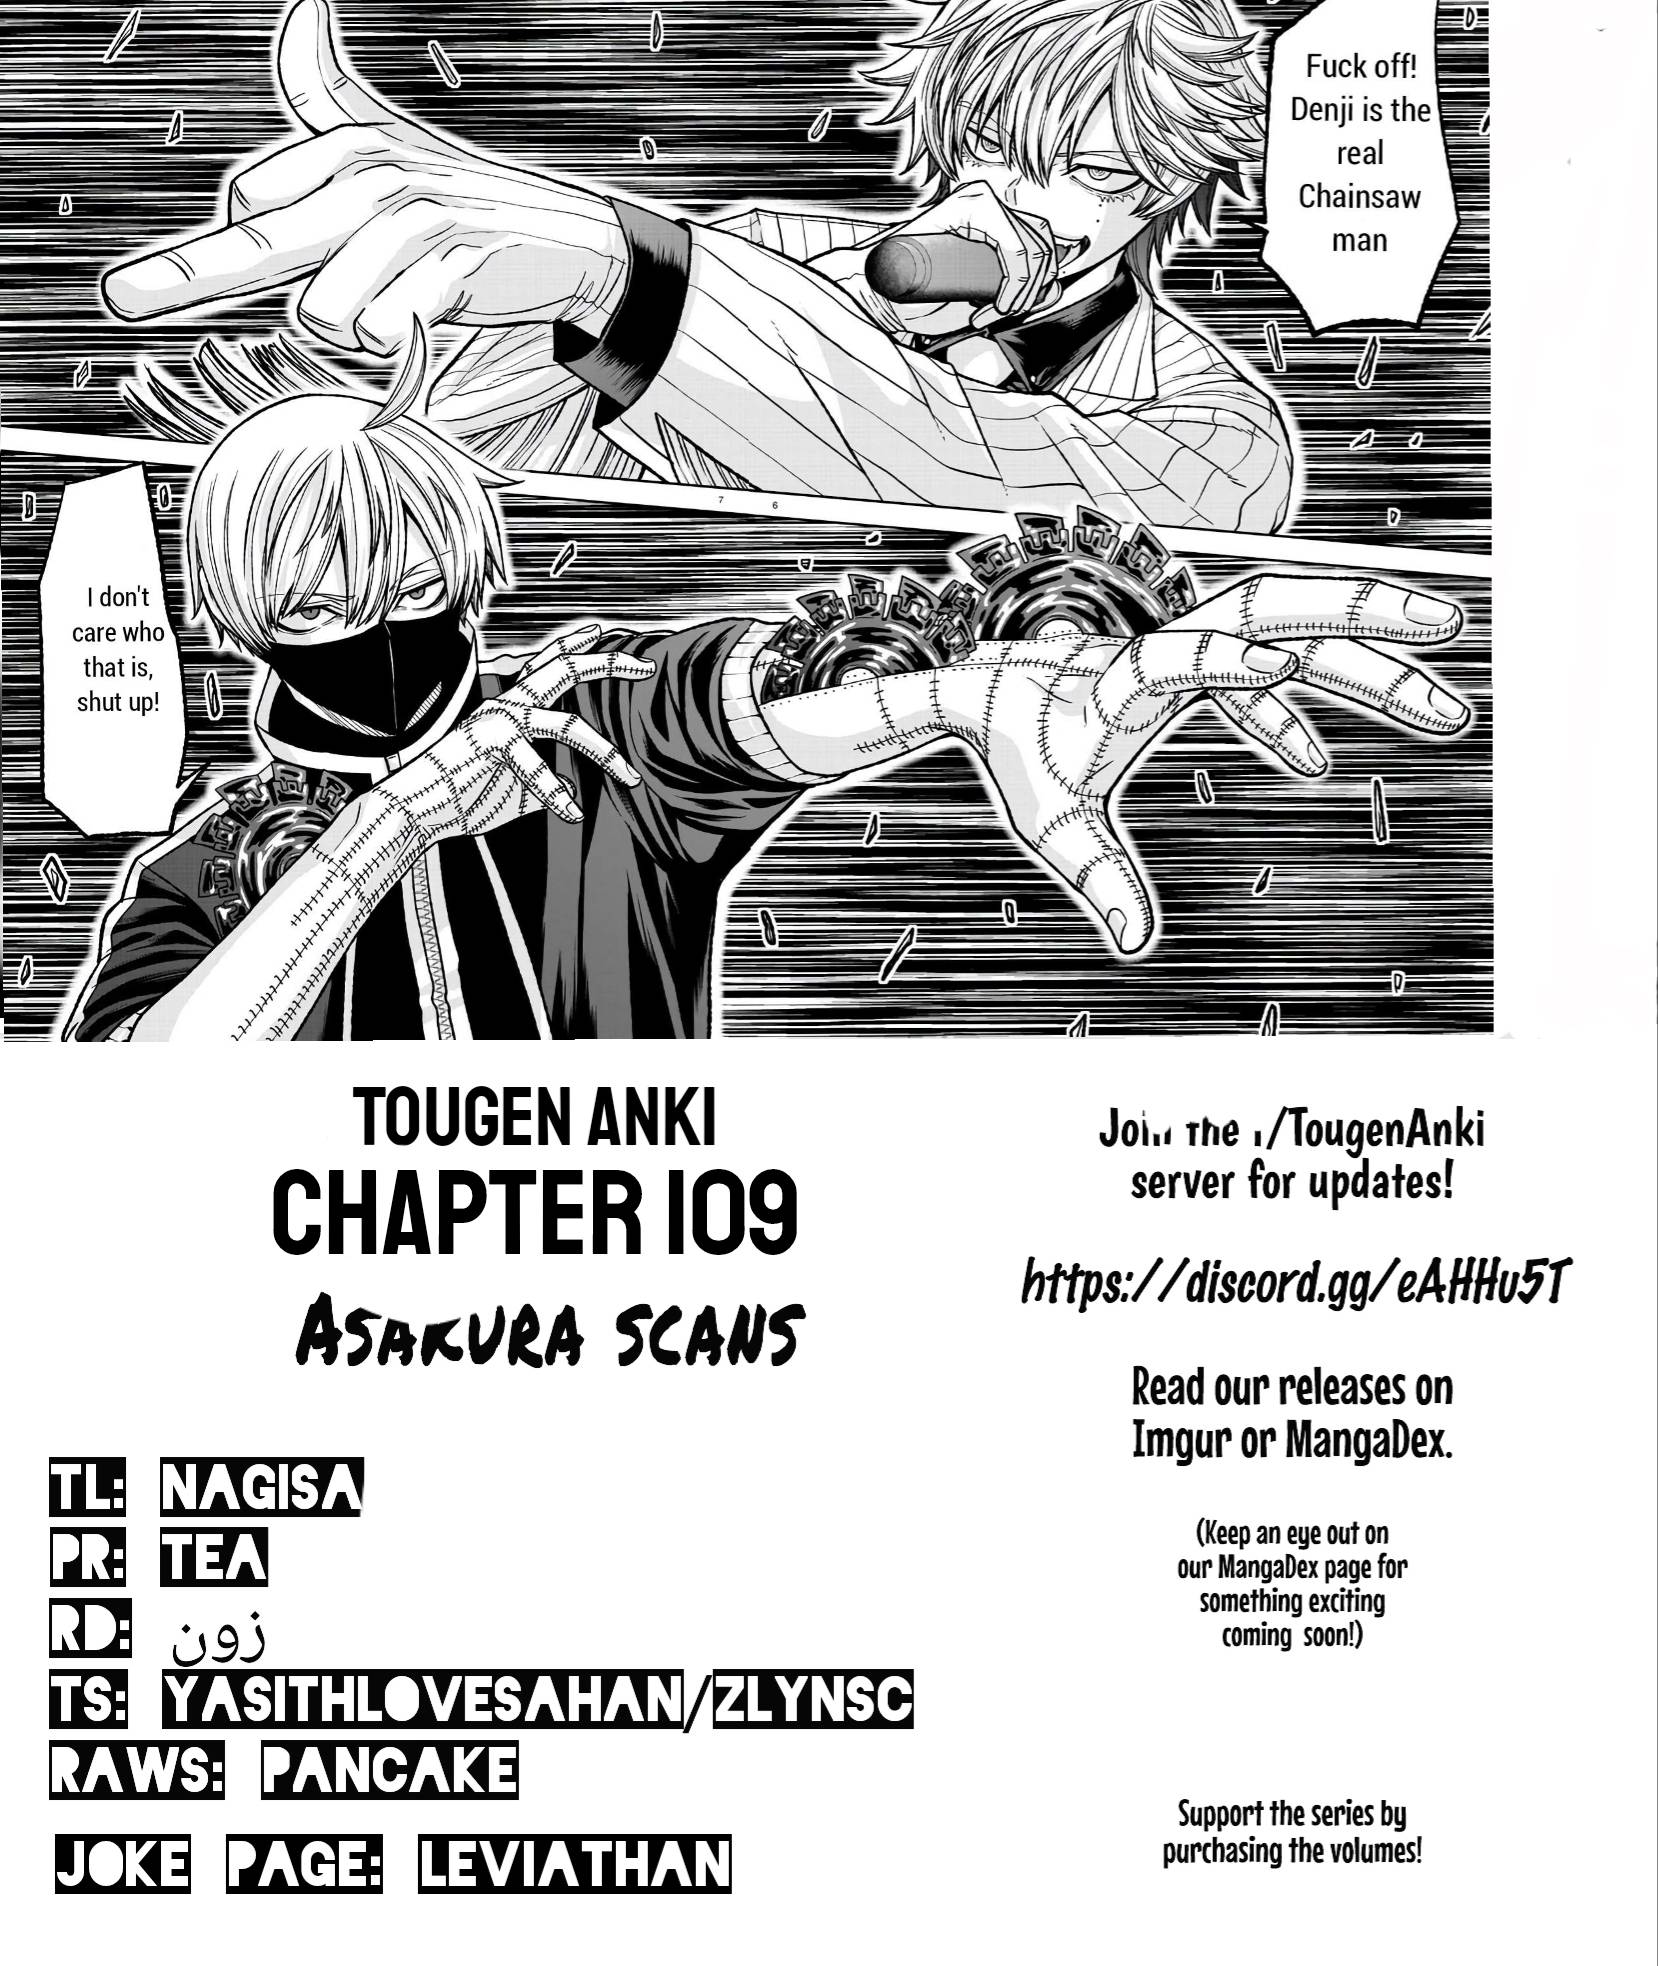 1  Chapter 150 - Chainsaw Man - MangaDex